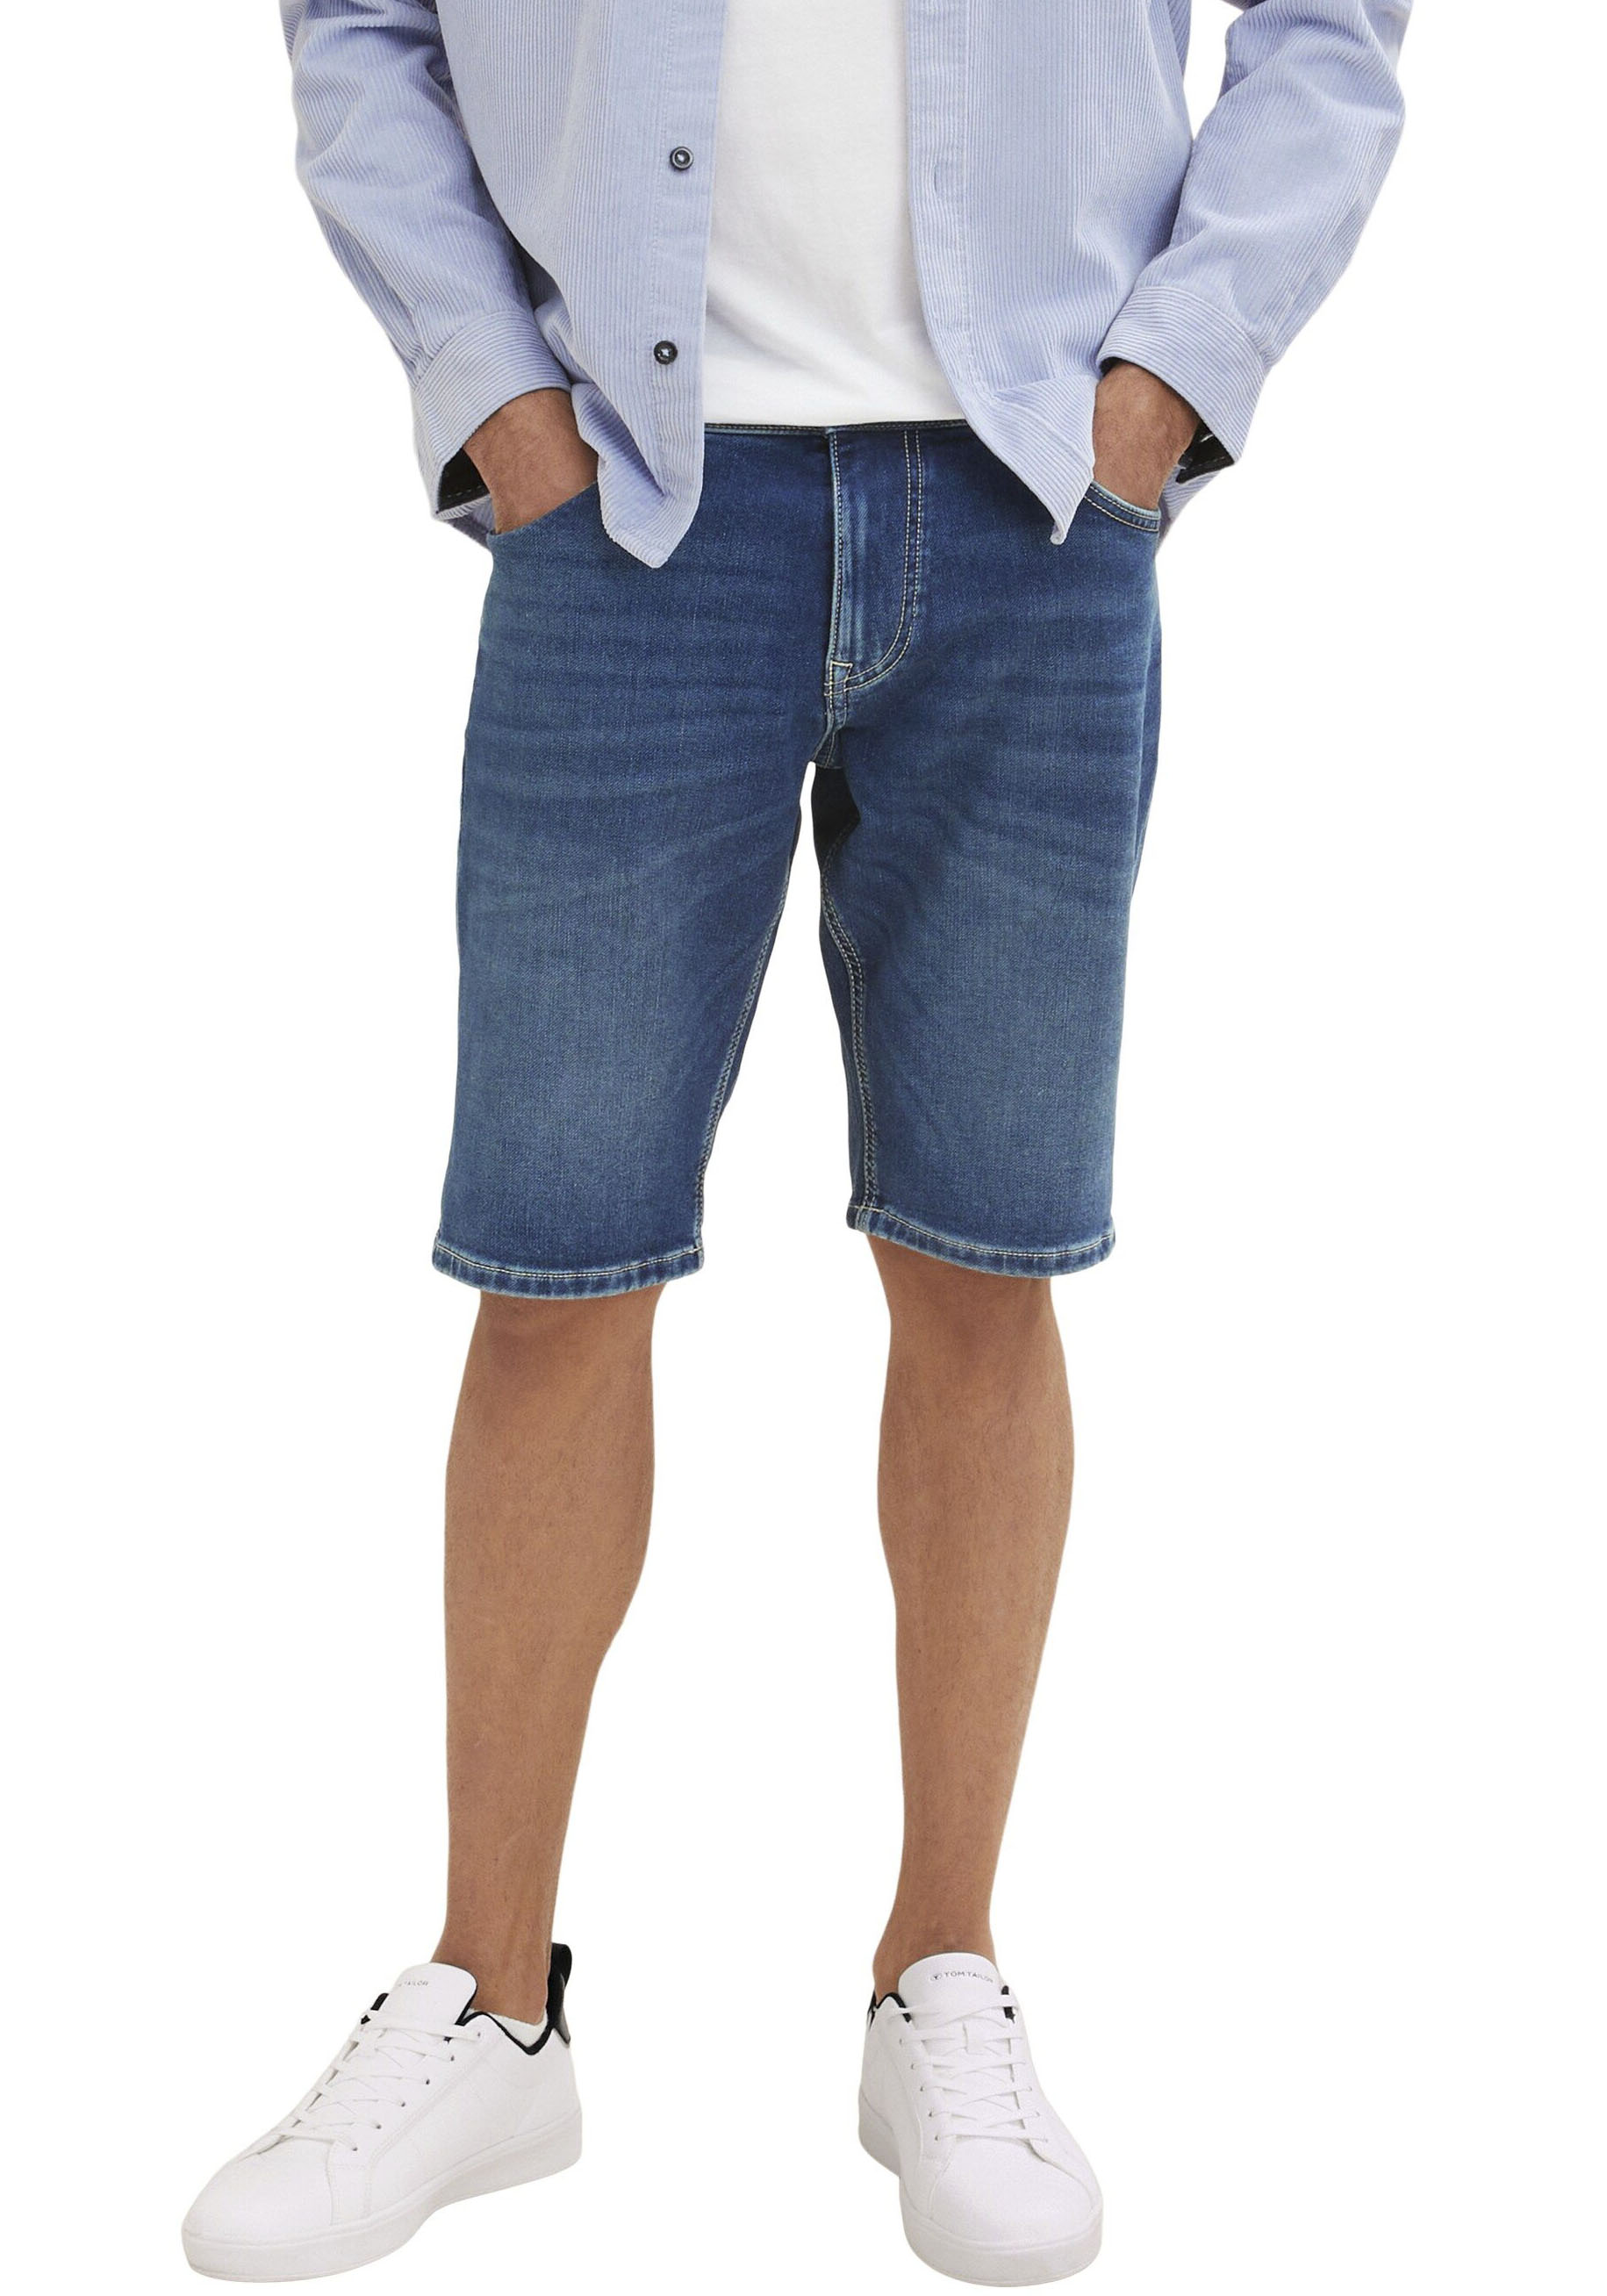 Jeans Shorts jetzt shoppen - Modetrends online aktuelle